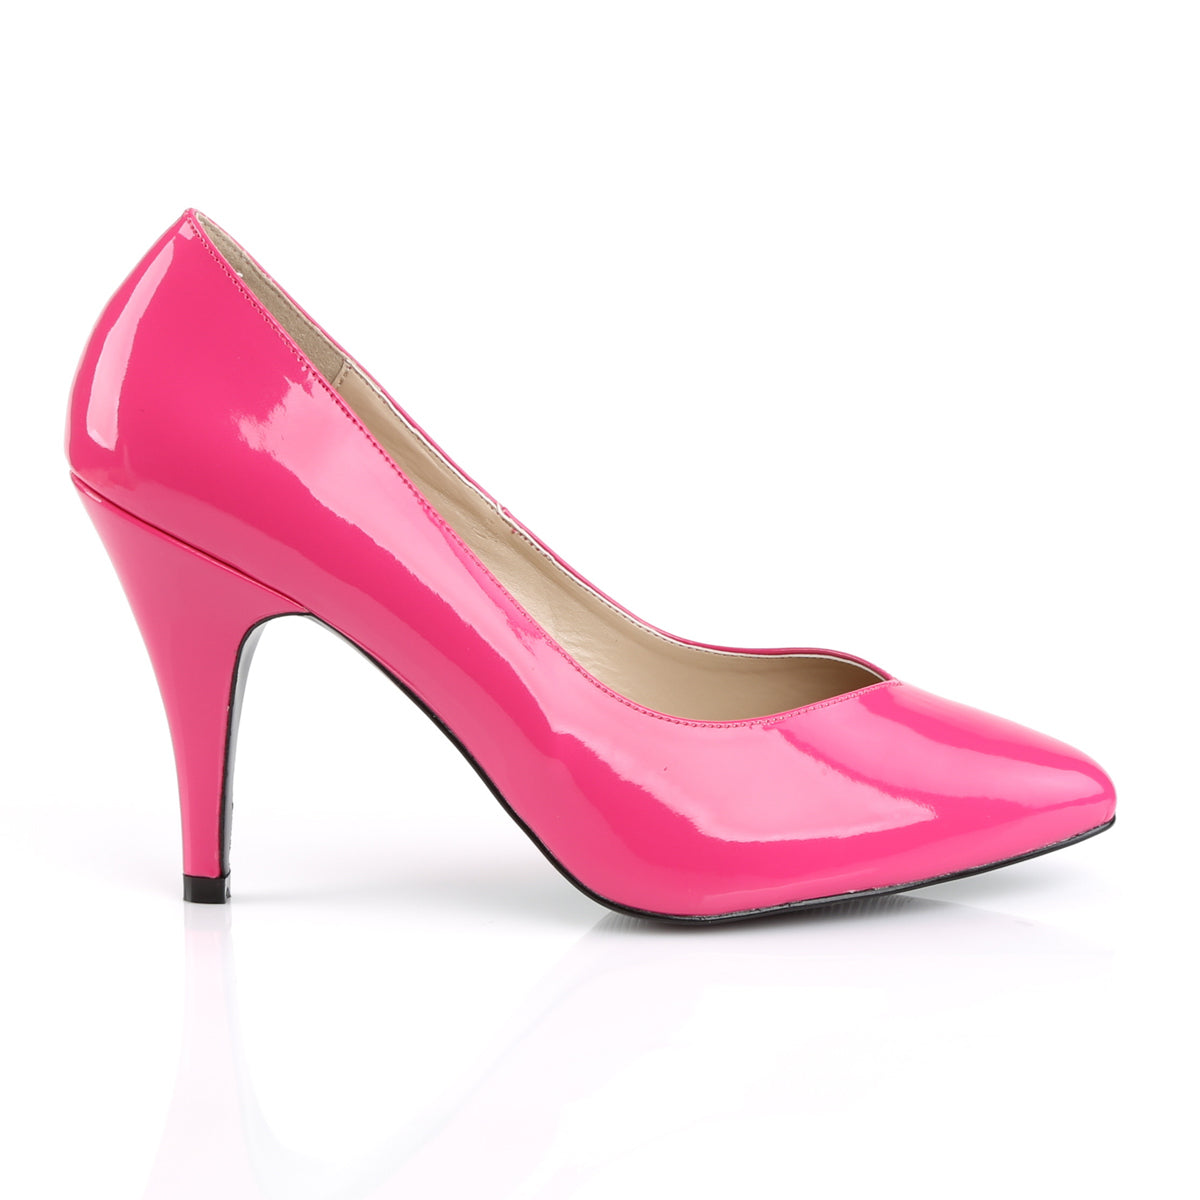 DREAM-420 Pink Label 4" Heel Hot Pink Patent Fetish Footwear-Pleaser Pink Label- Large Size Ladies Shoes